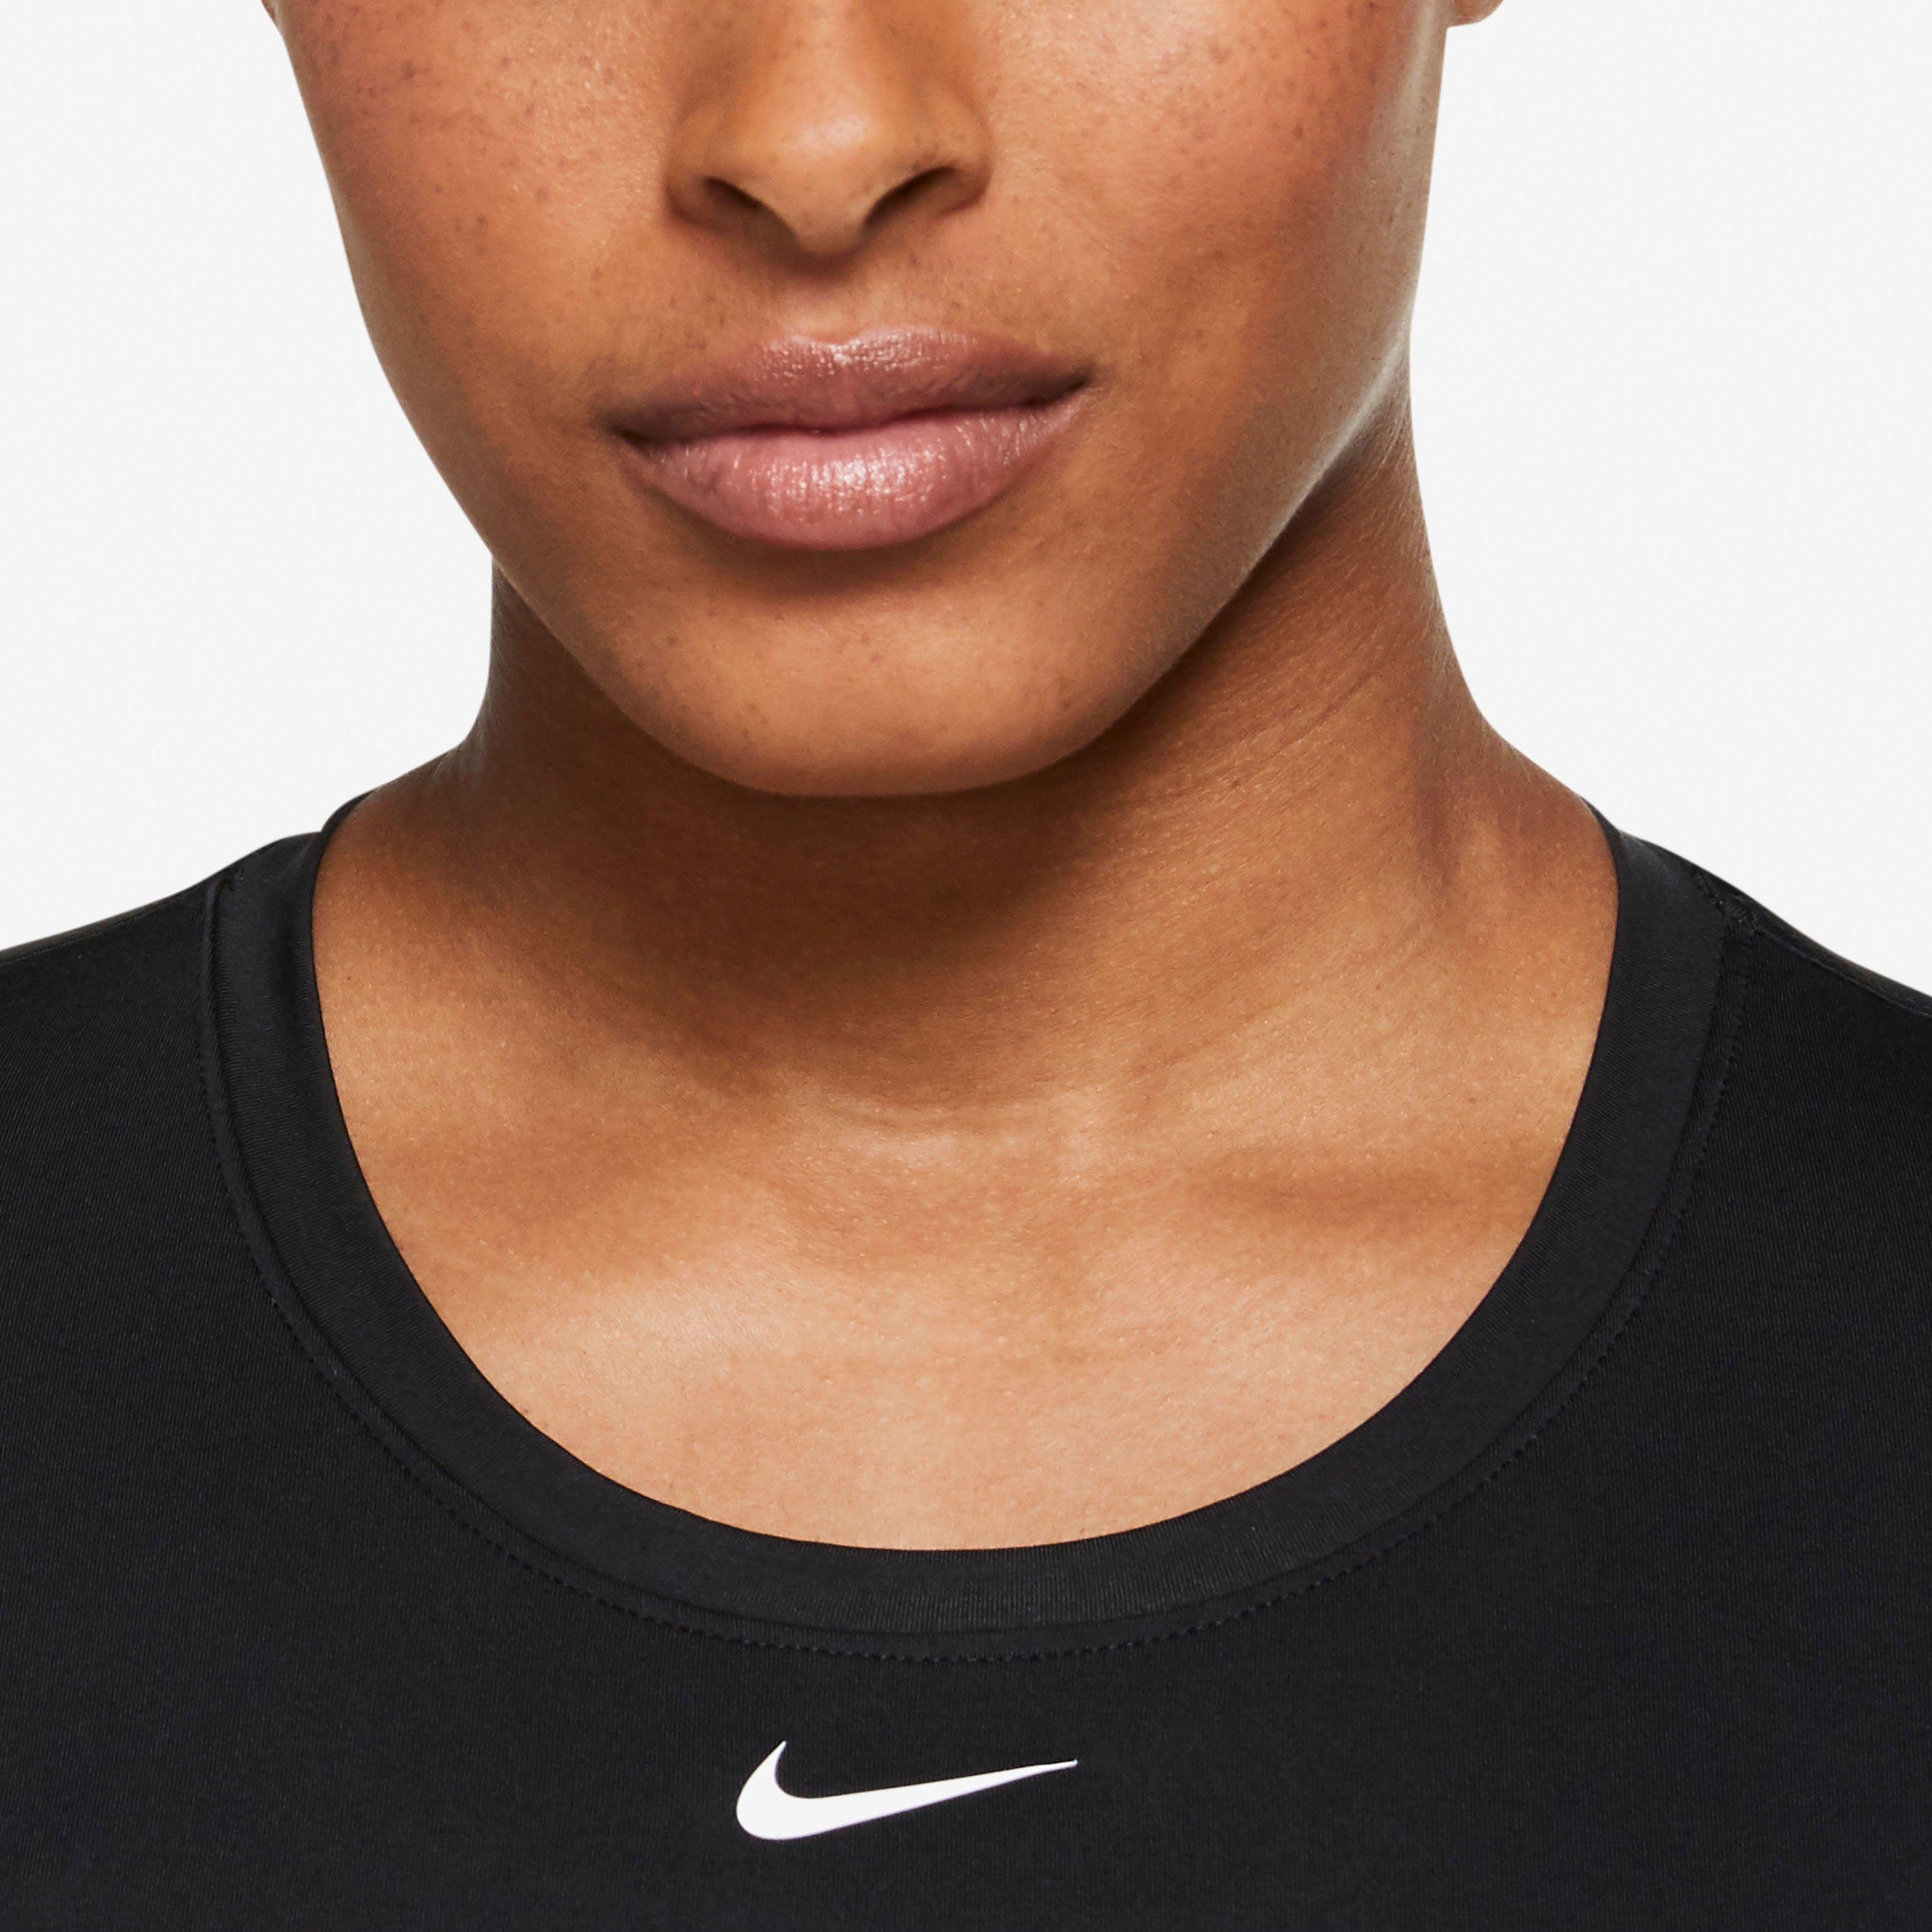 WOMEN'S Nike FIT ONE SLIM Trainingsshirt schwarz TOP DRI-FIT SHORT-SLEEVE